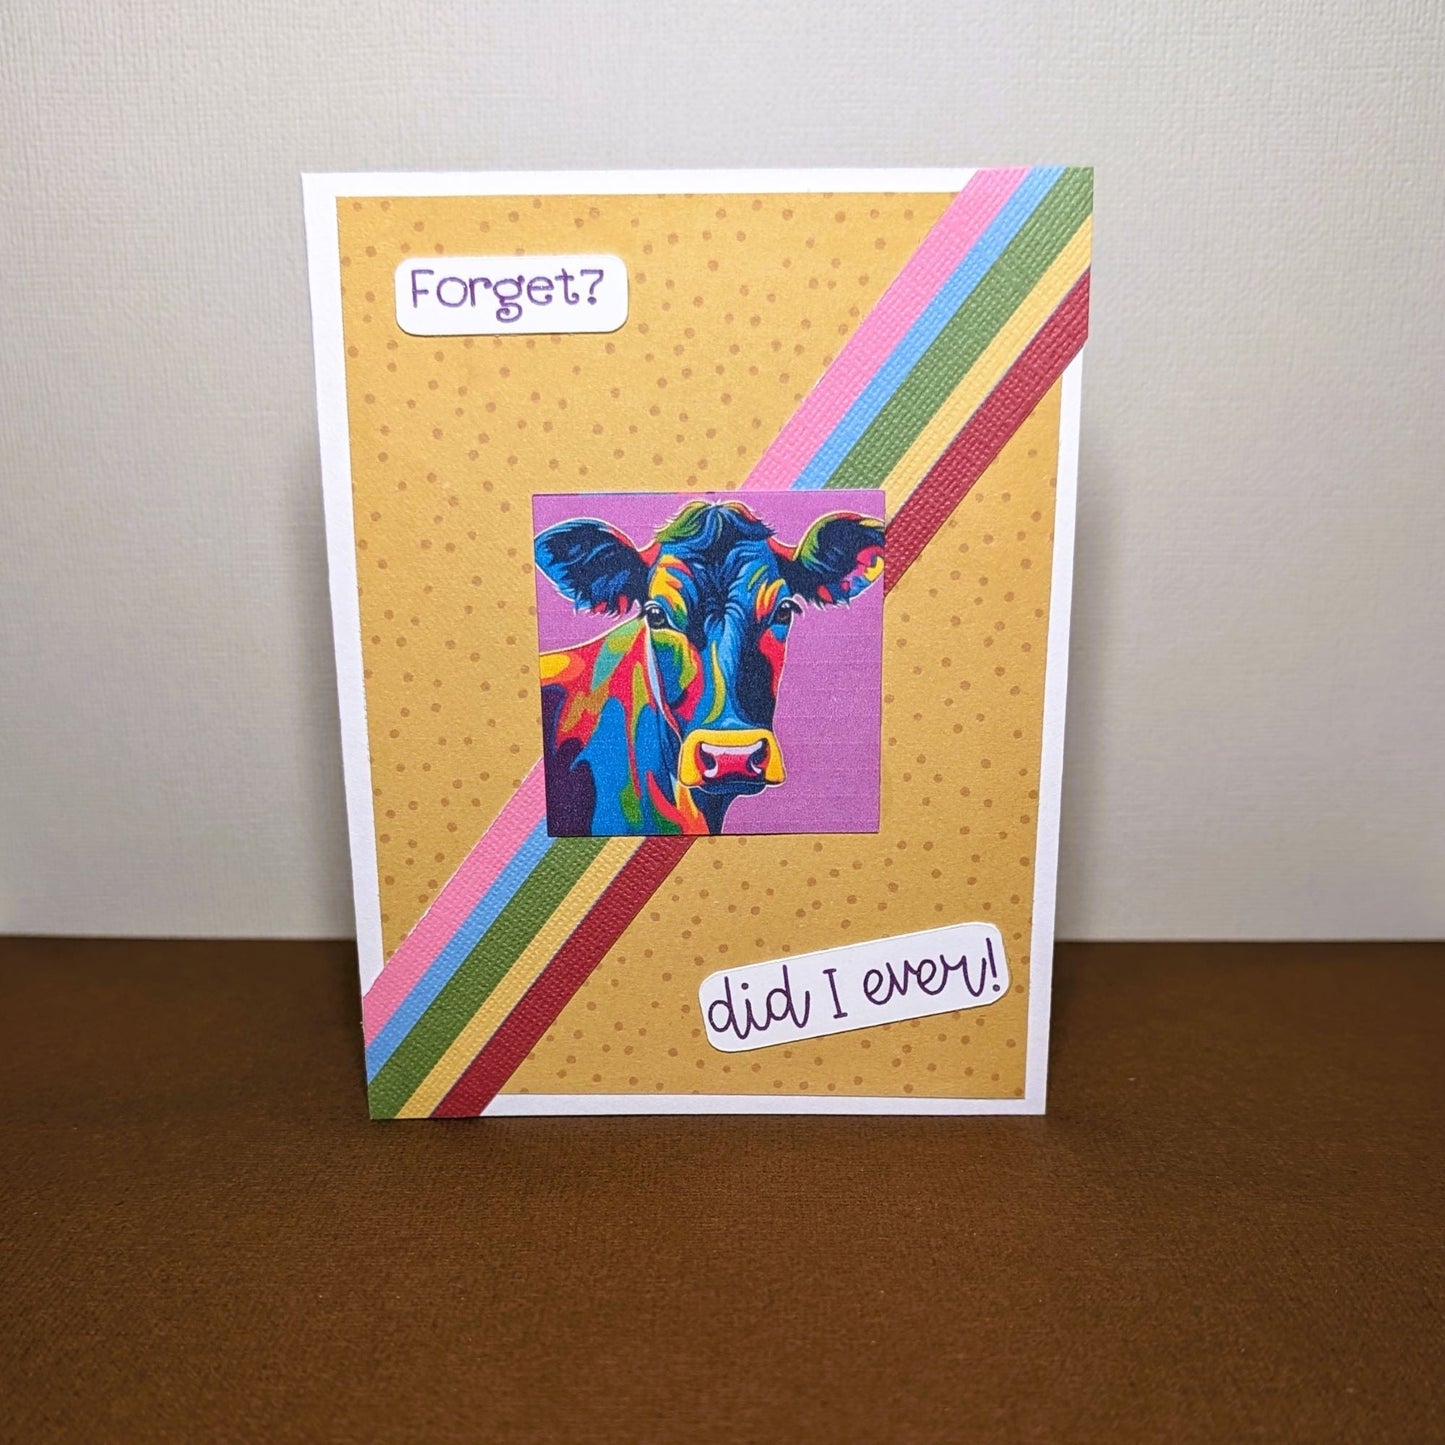 Salty Heifer - Forget? Did I Ever! - Sassy Handmade Greeting Card - 31 Rubies Designs